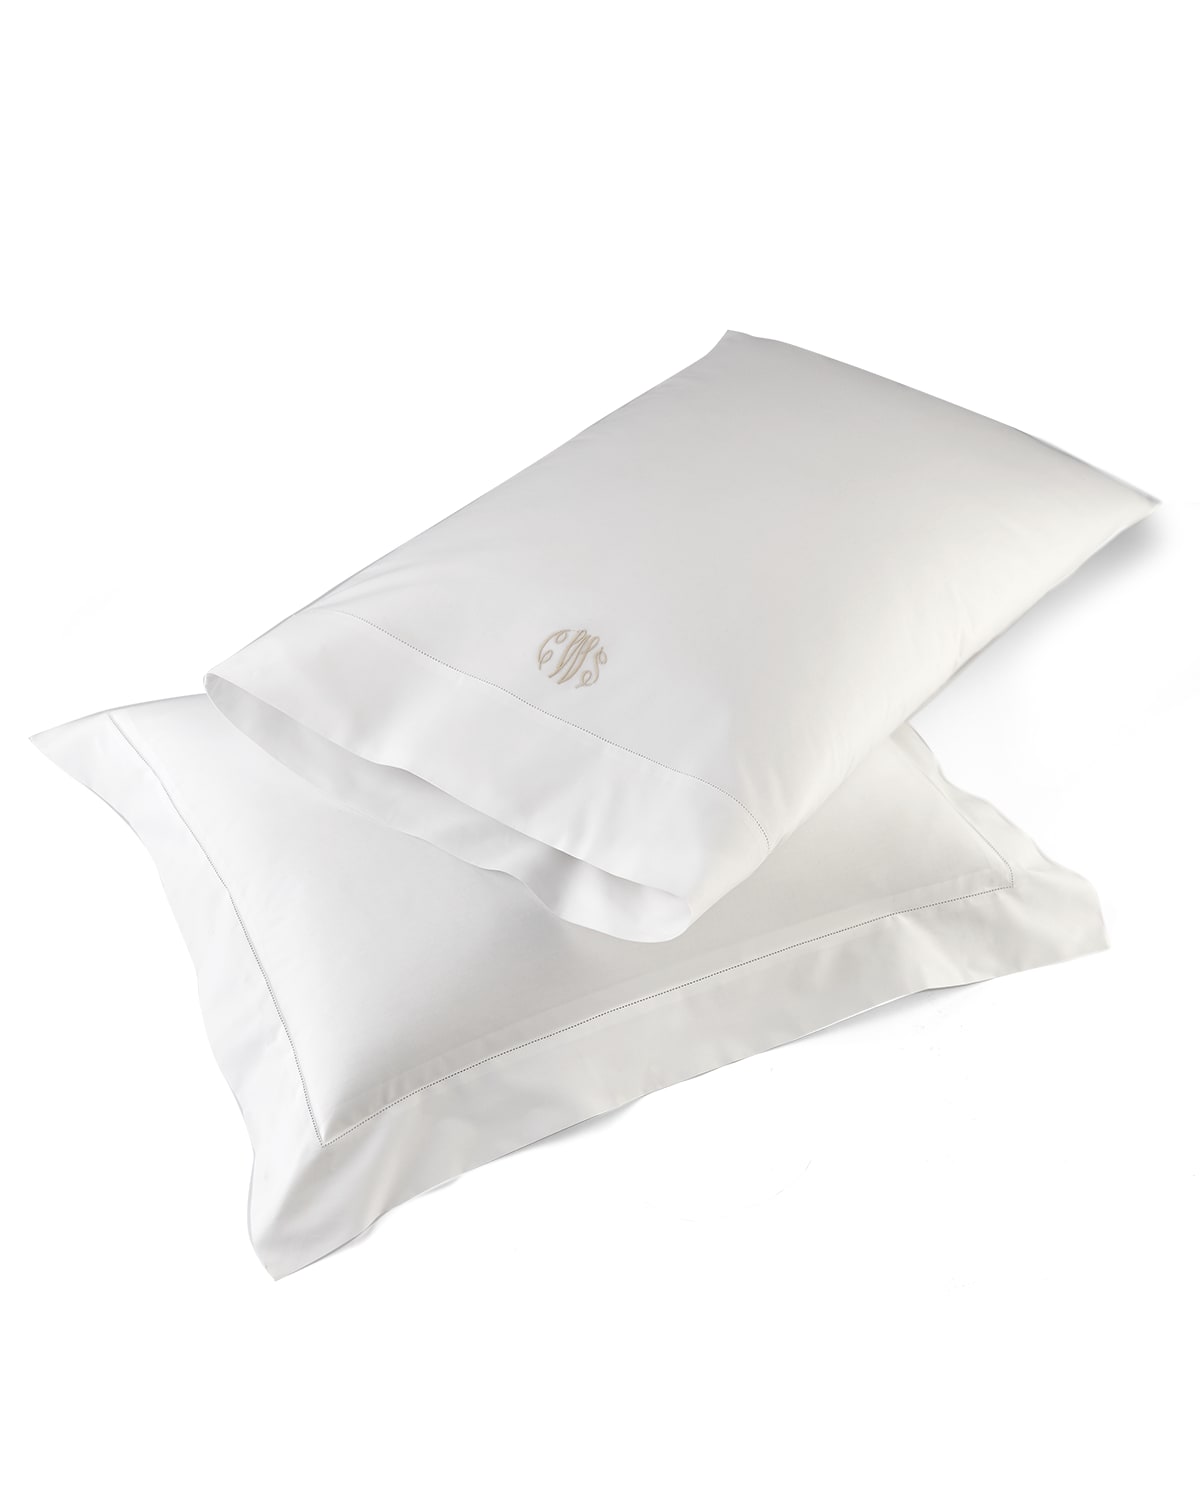 Matouk Positano Hemstitch Wrinkle Free King Pillowcase, Pair In White